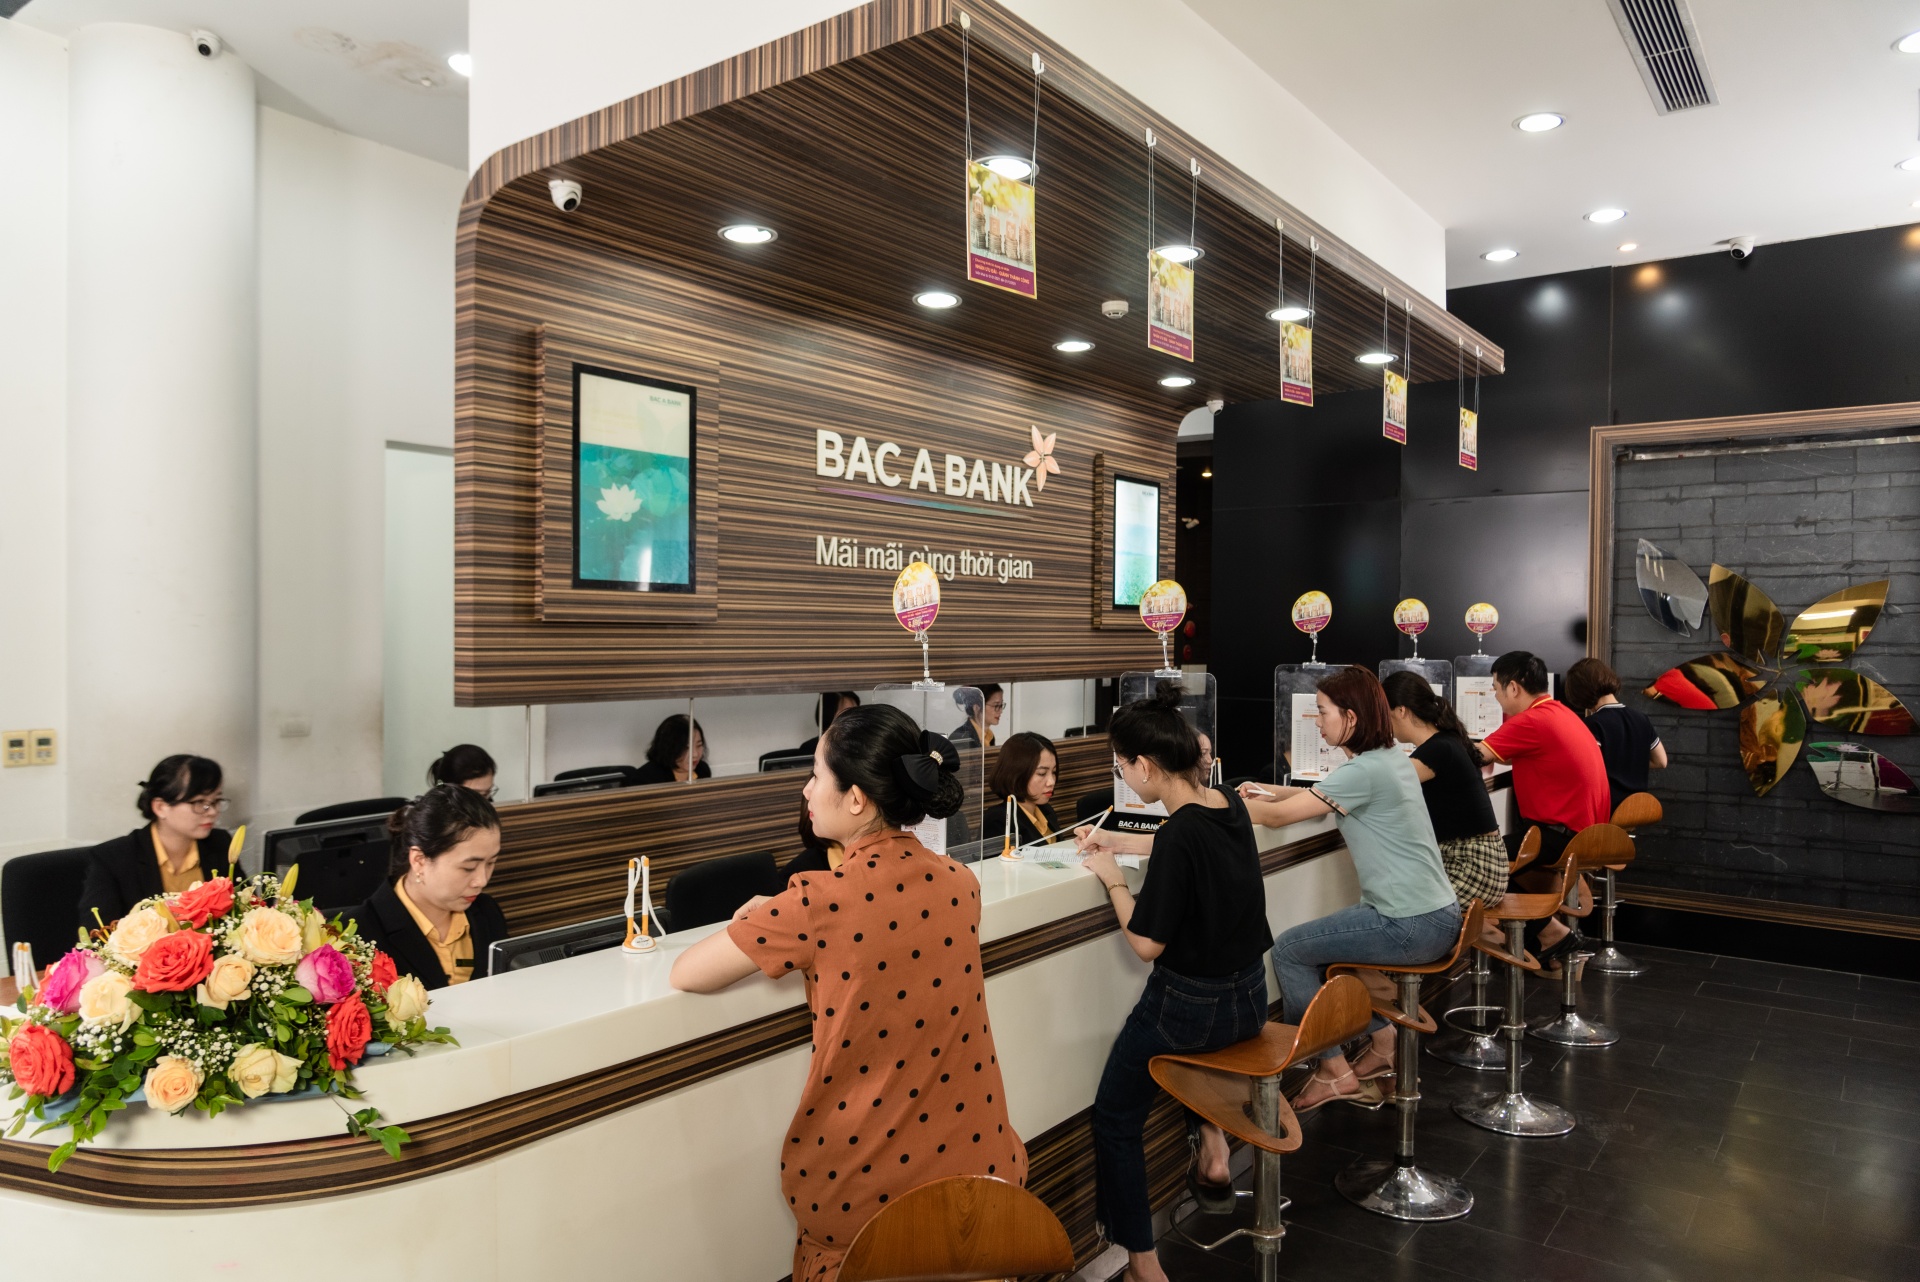 BAC A BANK offers fresh credit programmes